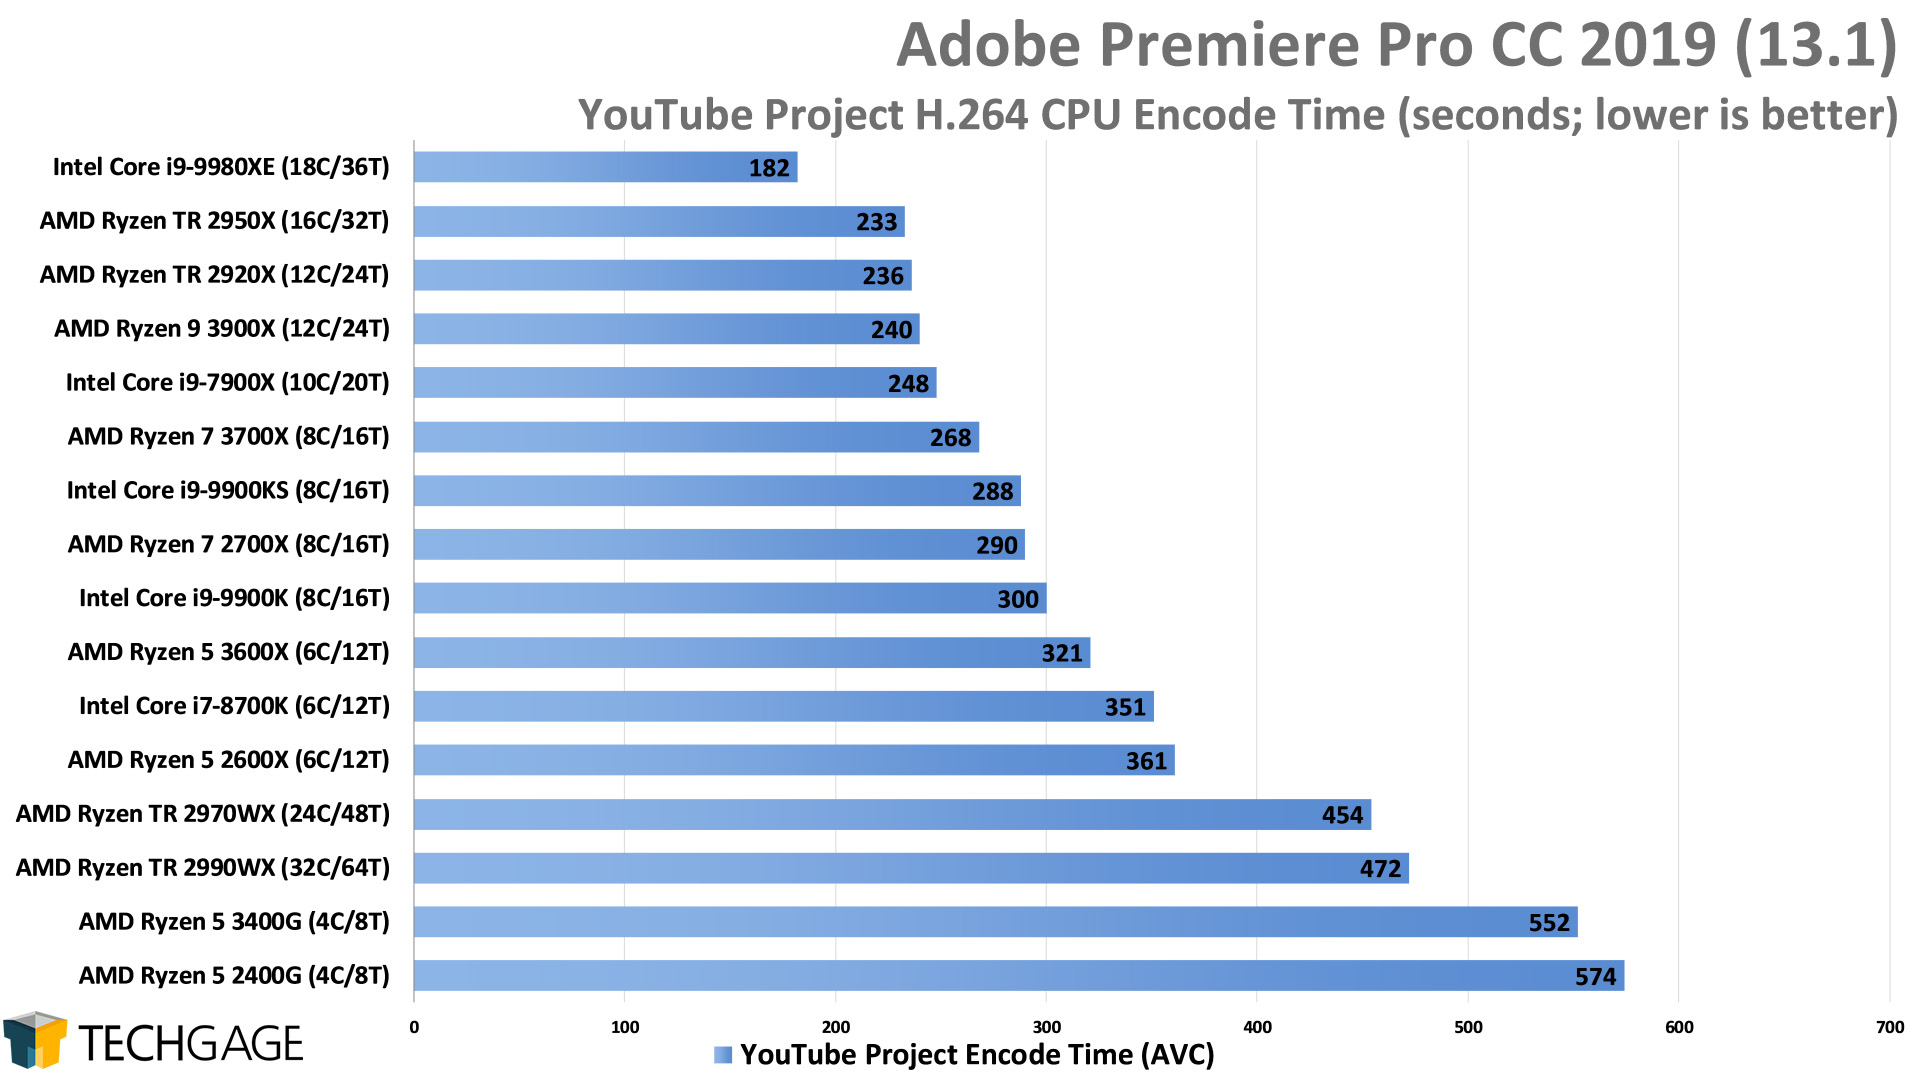 Adobe Premiere Pro 2019 - YouTube Project CPU Encode Performance (Intel Core i9-9900KS)